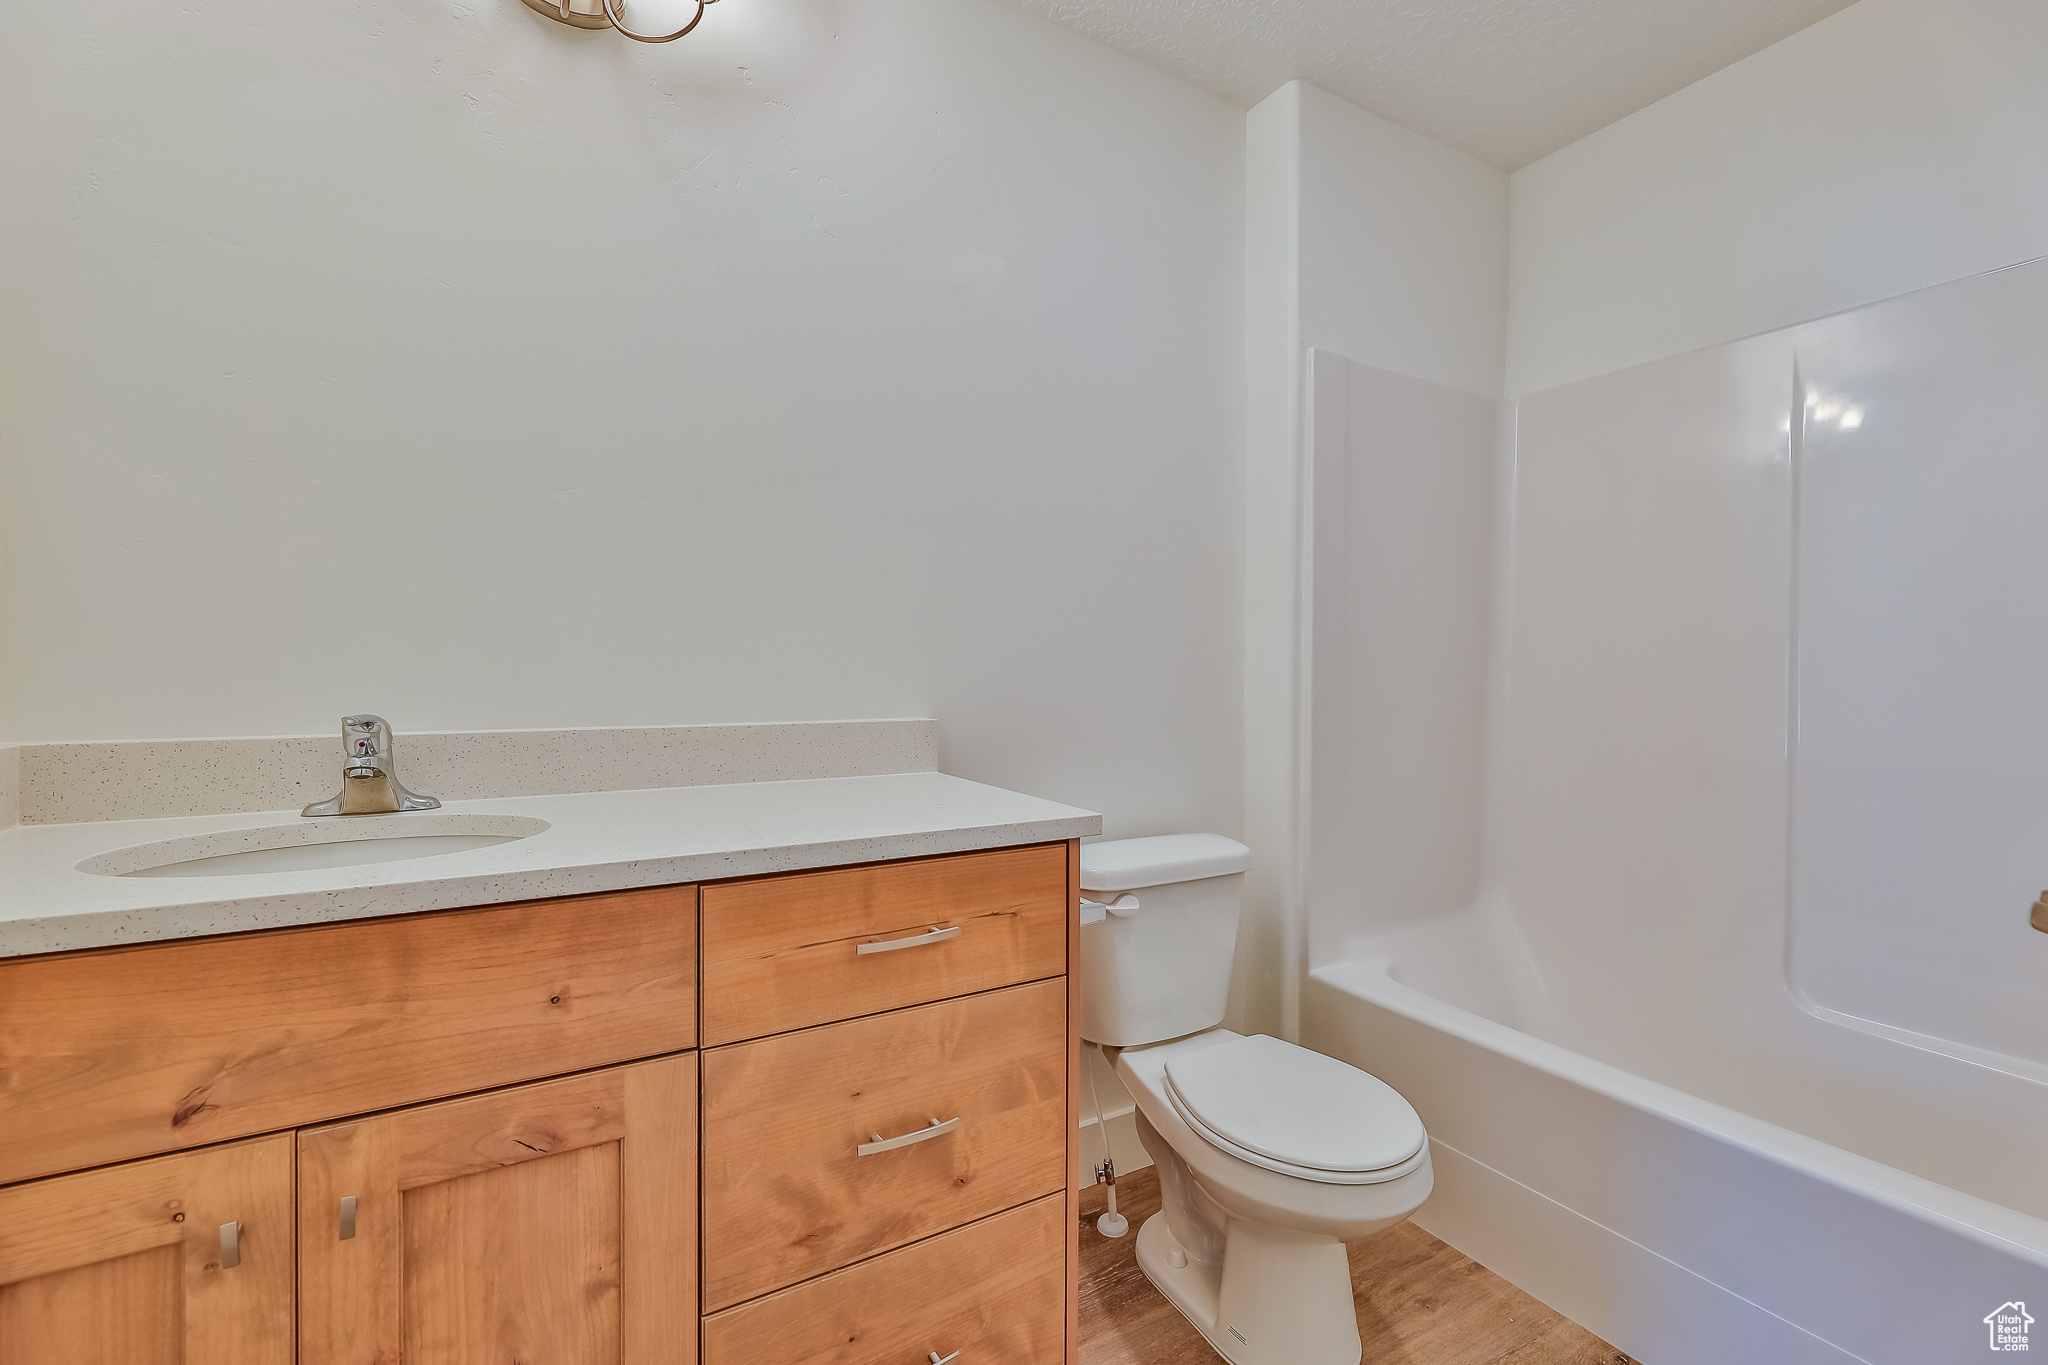 Full bathroom with vanity, toilet, shower / bath combination, and hardwood / wood-style flooring